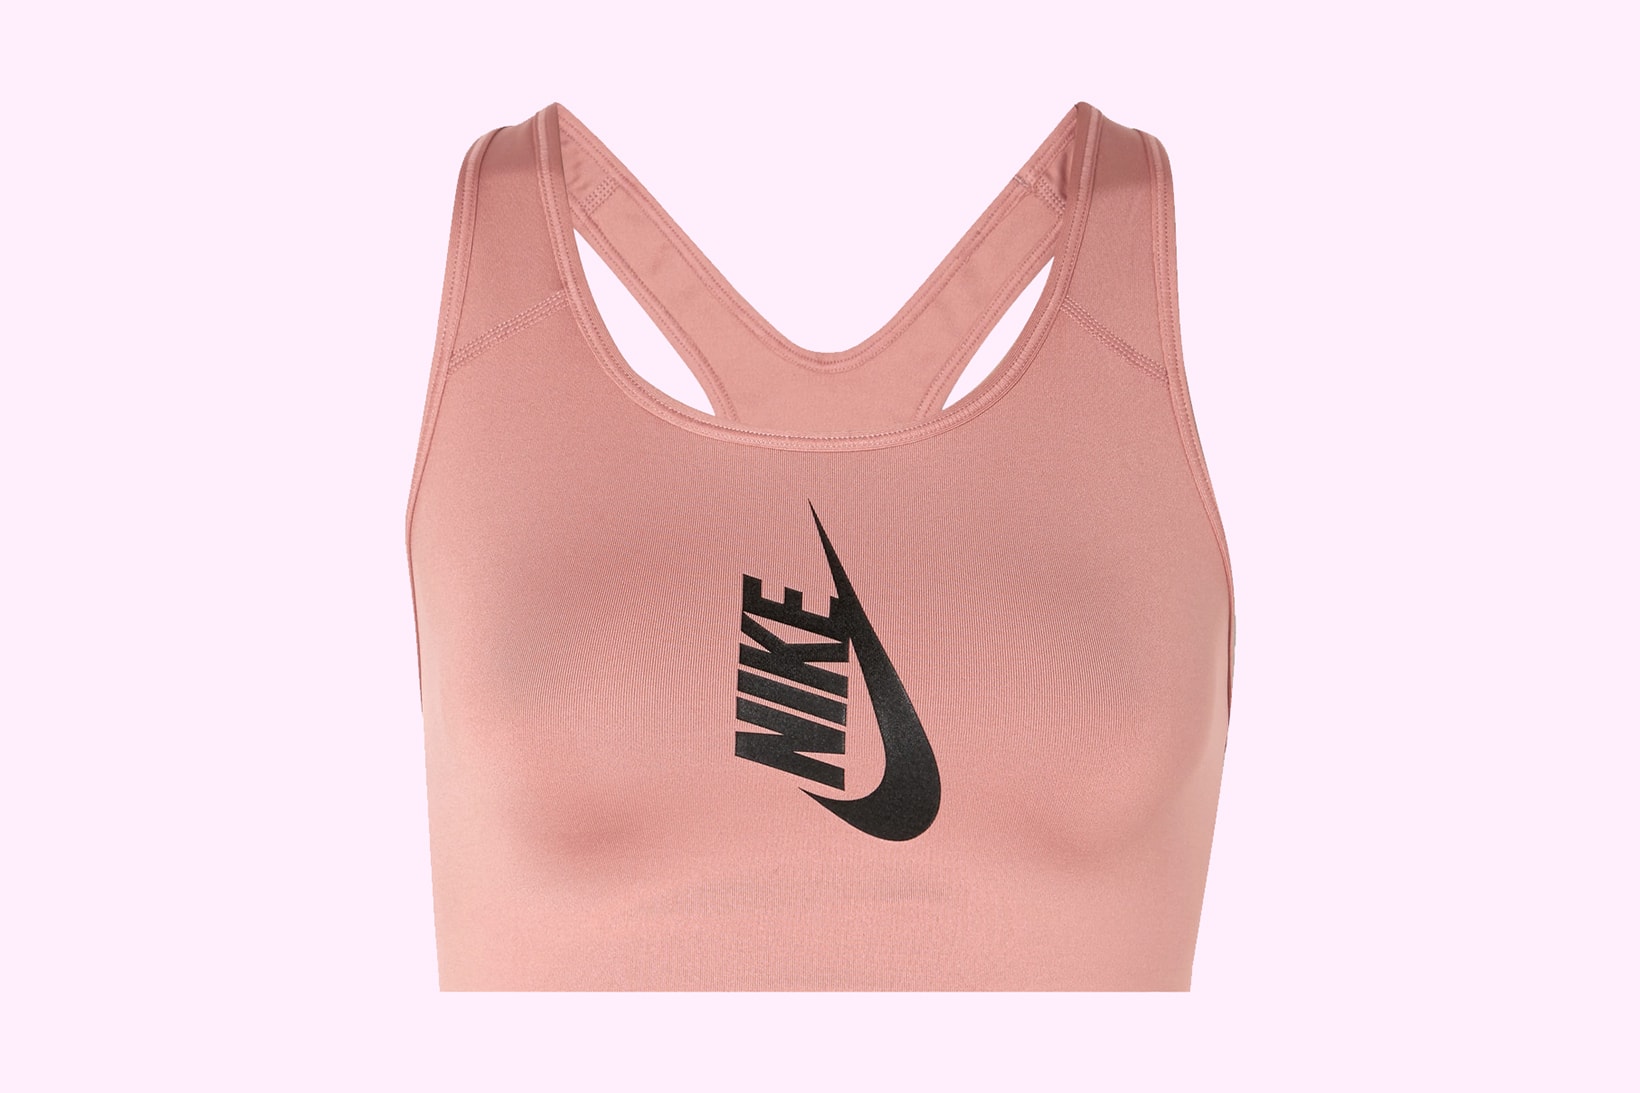 Moschino Logo Underband Sports Bra in Pink